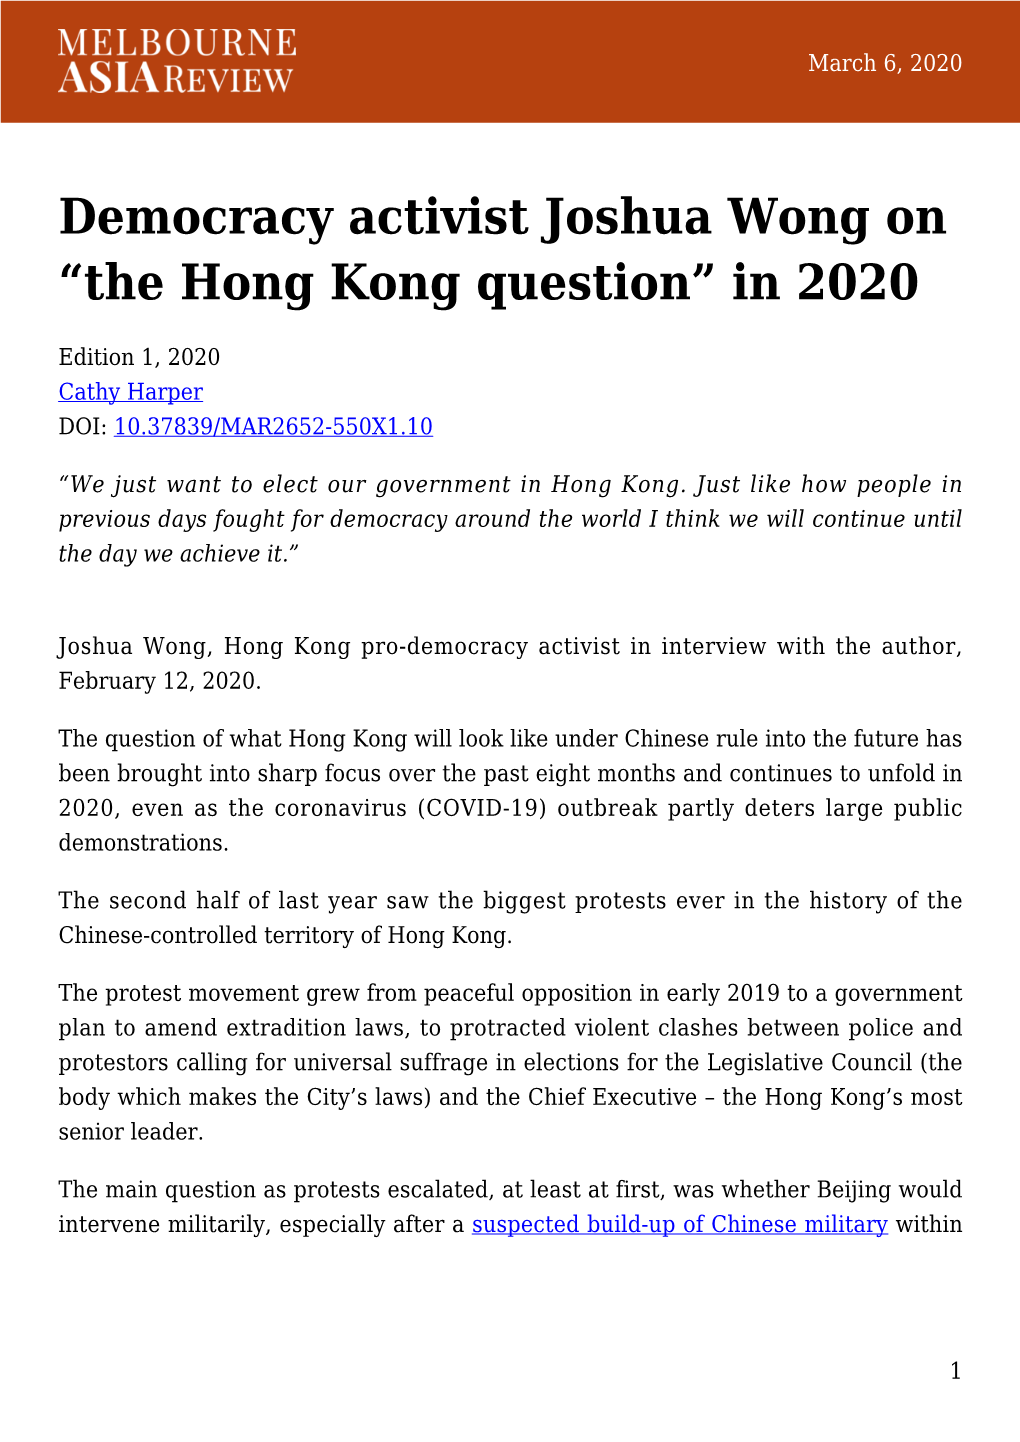 Democracy Activist Joshua Wong on “The Hong Kong Question” in 2020